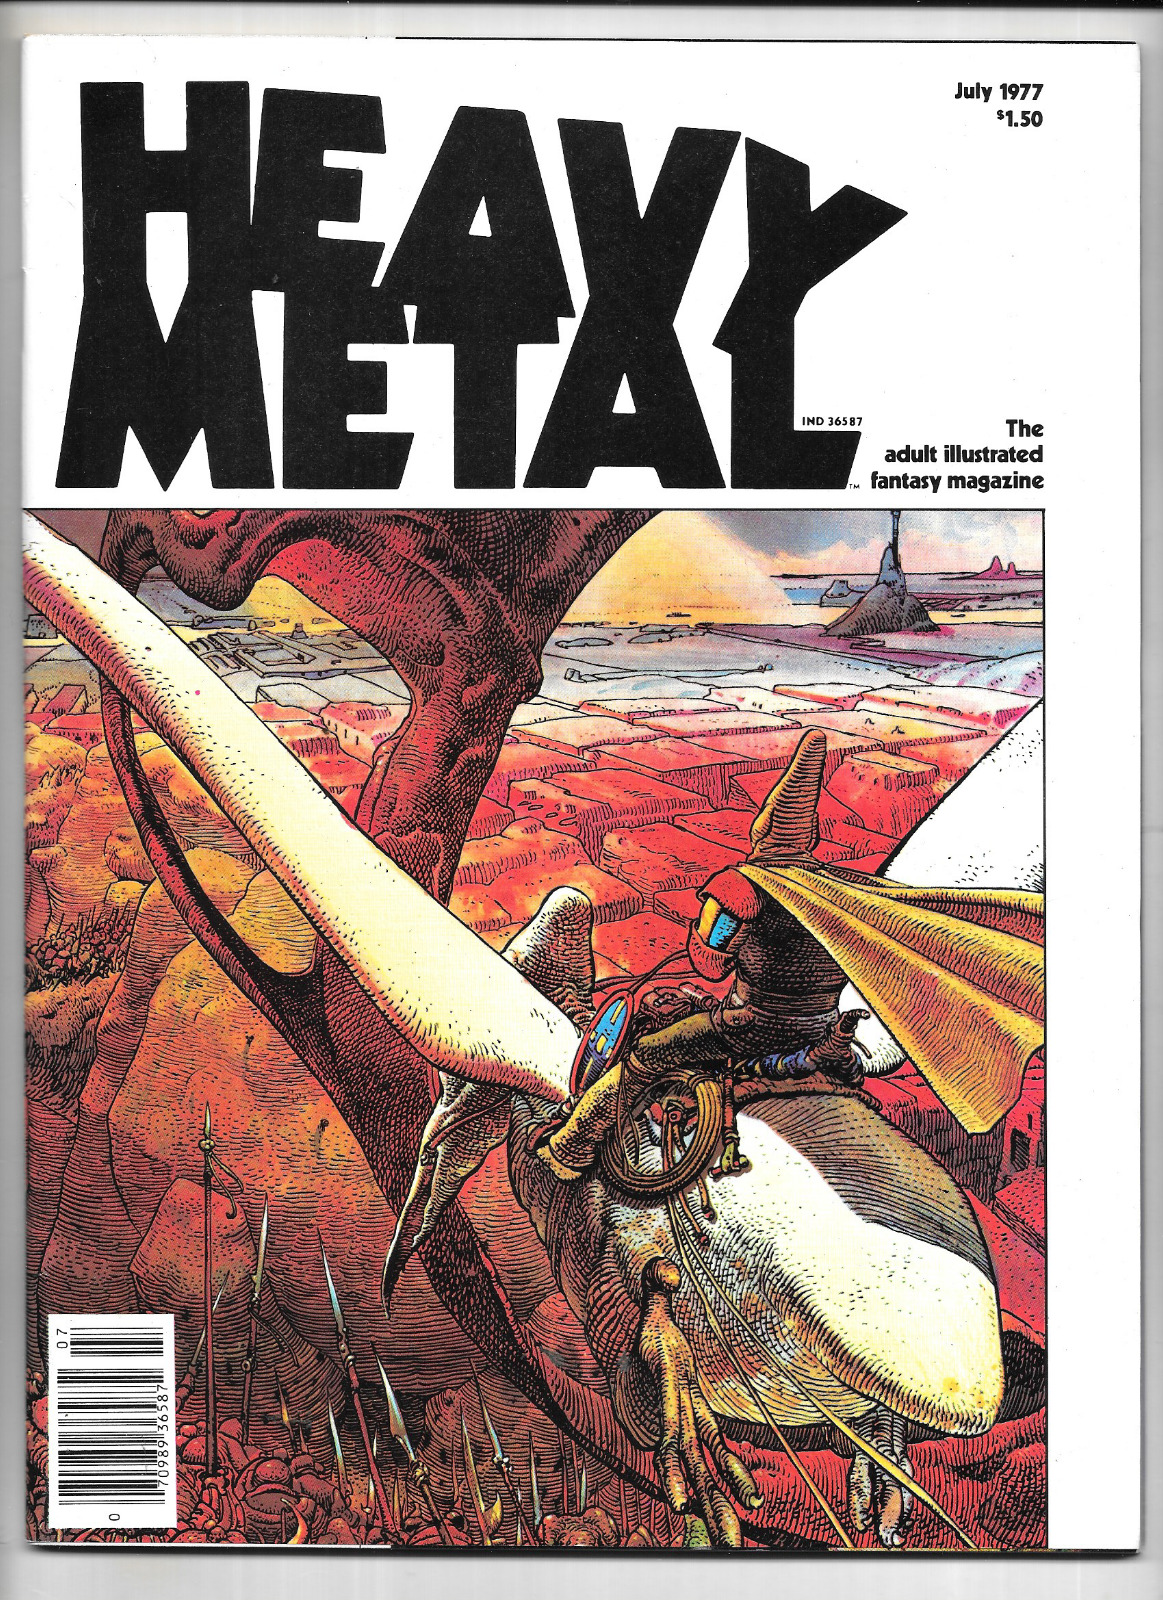 Heavy Metal Magazine #4 July 1977 VTG Newsstand Edition +Card Arzach Moebius VF+